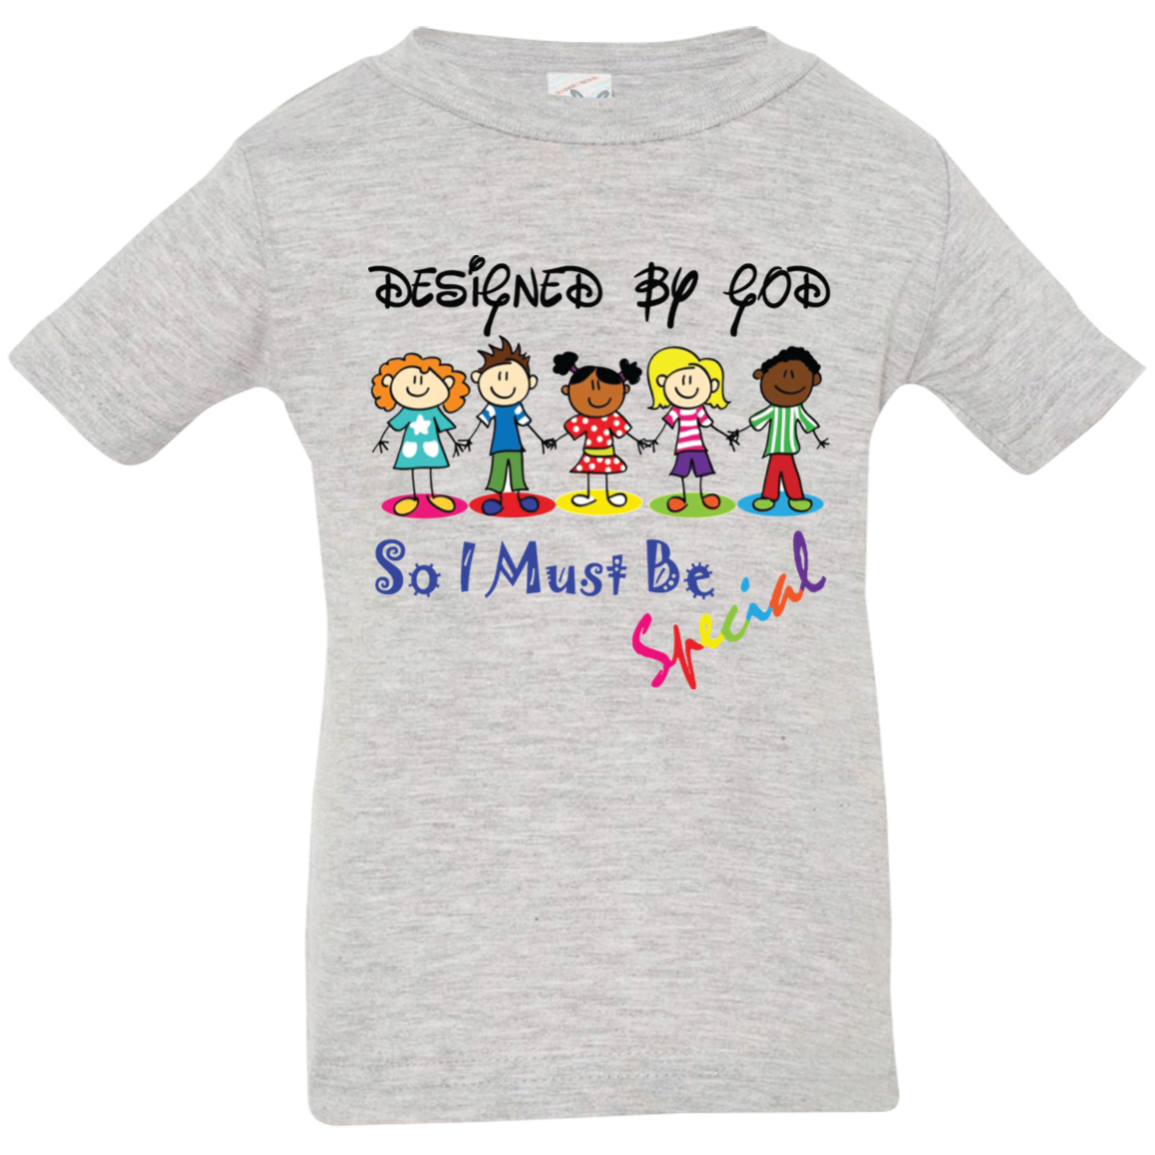 Designed by God Unisex Infant T-Shirt